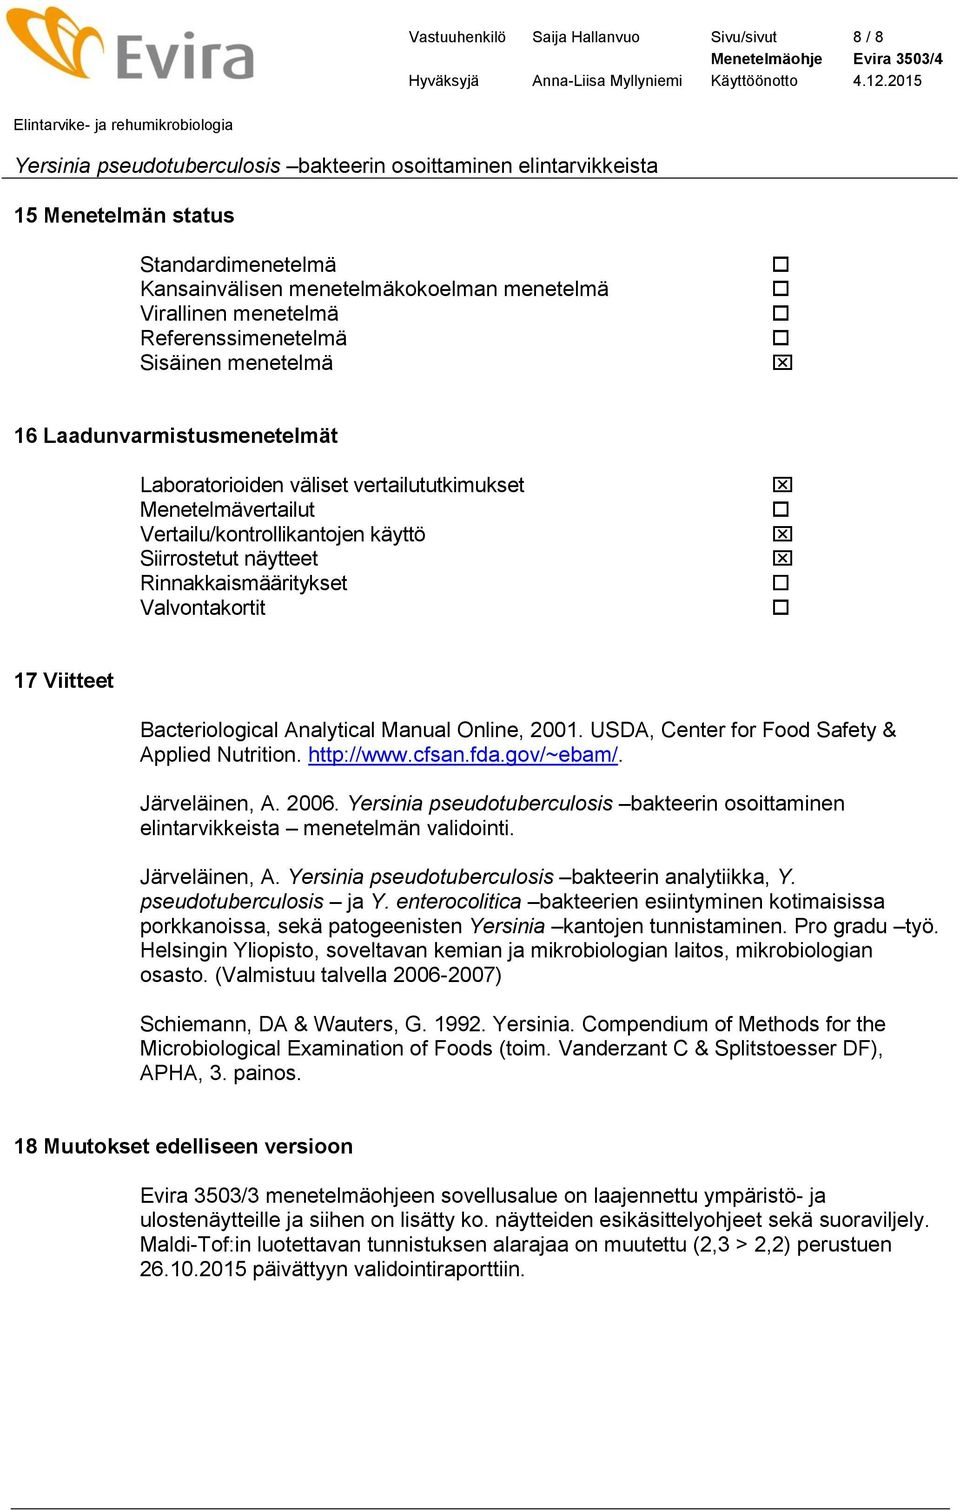 Bacteriological Analytical Manual Online, 2001. USDA, Center for Food Safety & Applied Nutrition. http://www.cfsan.fda.gov/~ebam/. Järveläinen, A. 2006.